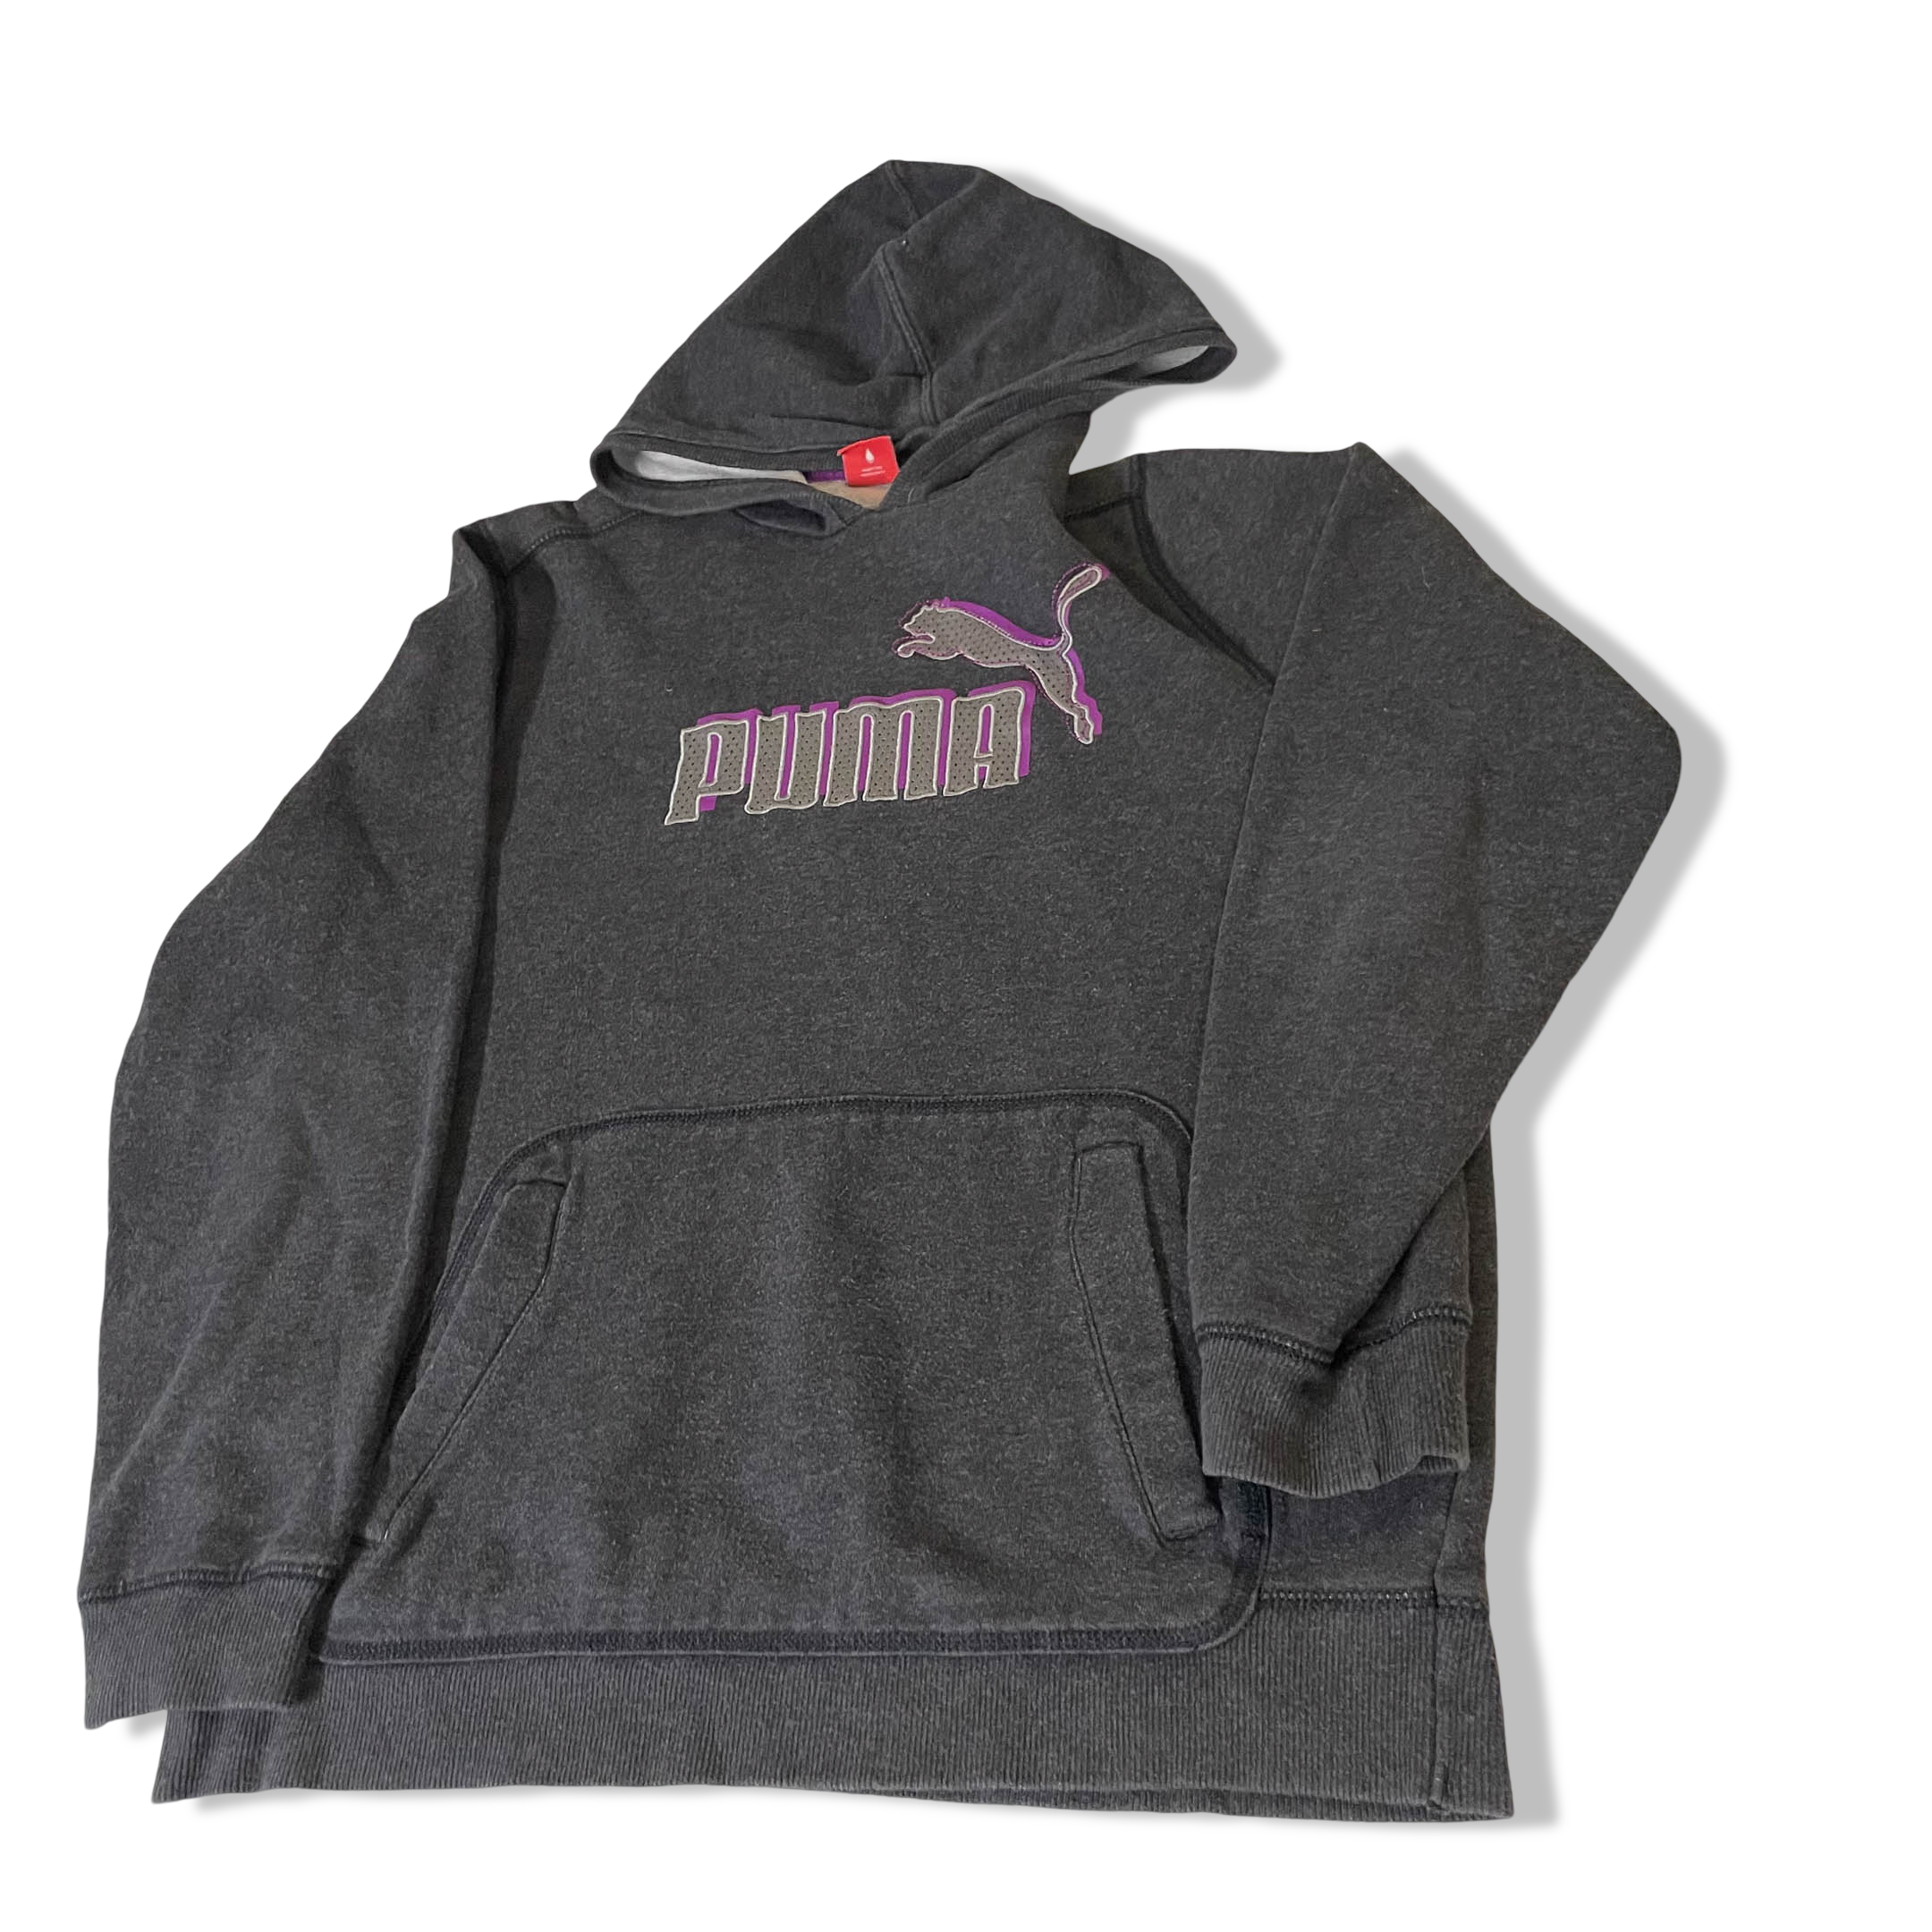 Vintage 90's Puma sport life style black big logo hoodie UK 34/36 |SKU 3817